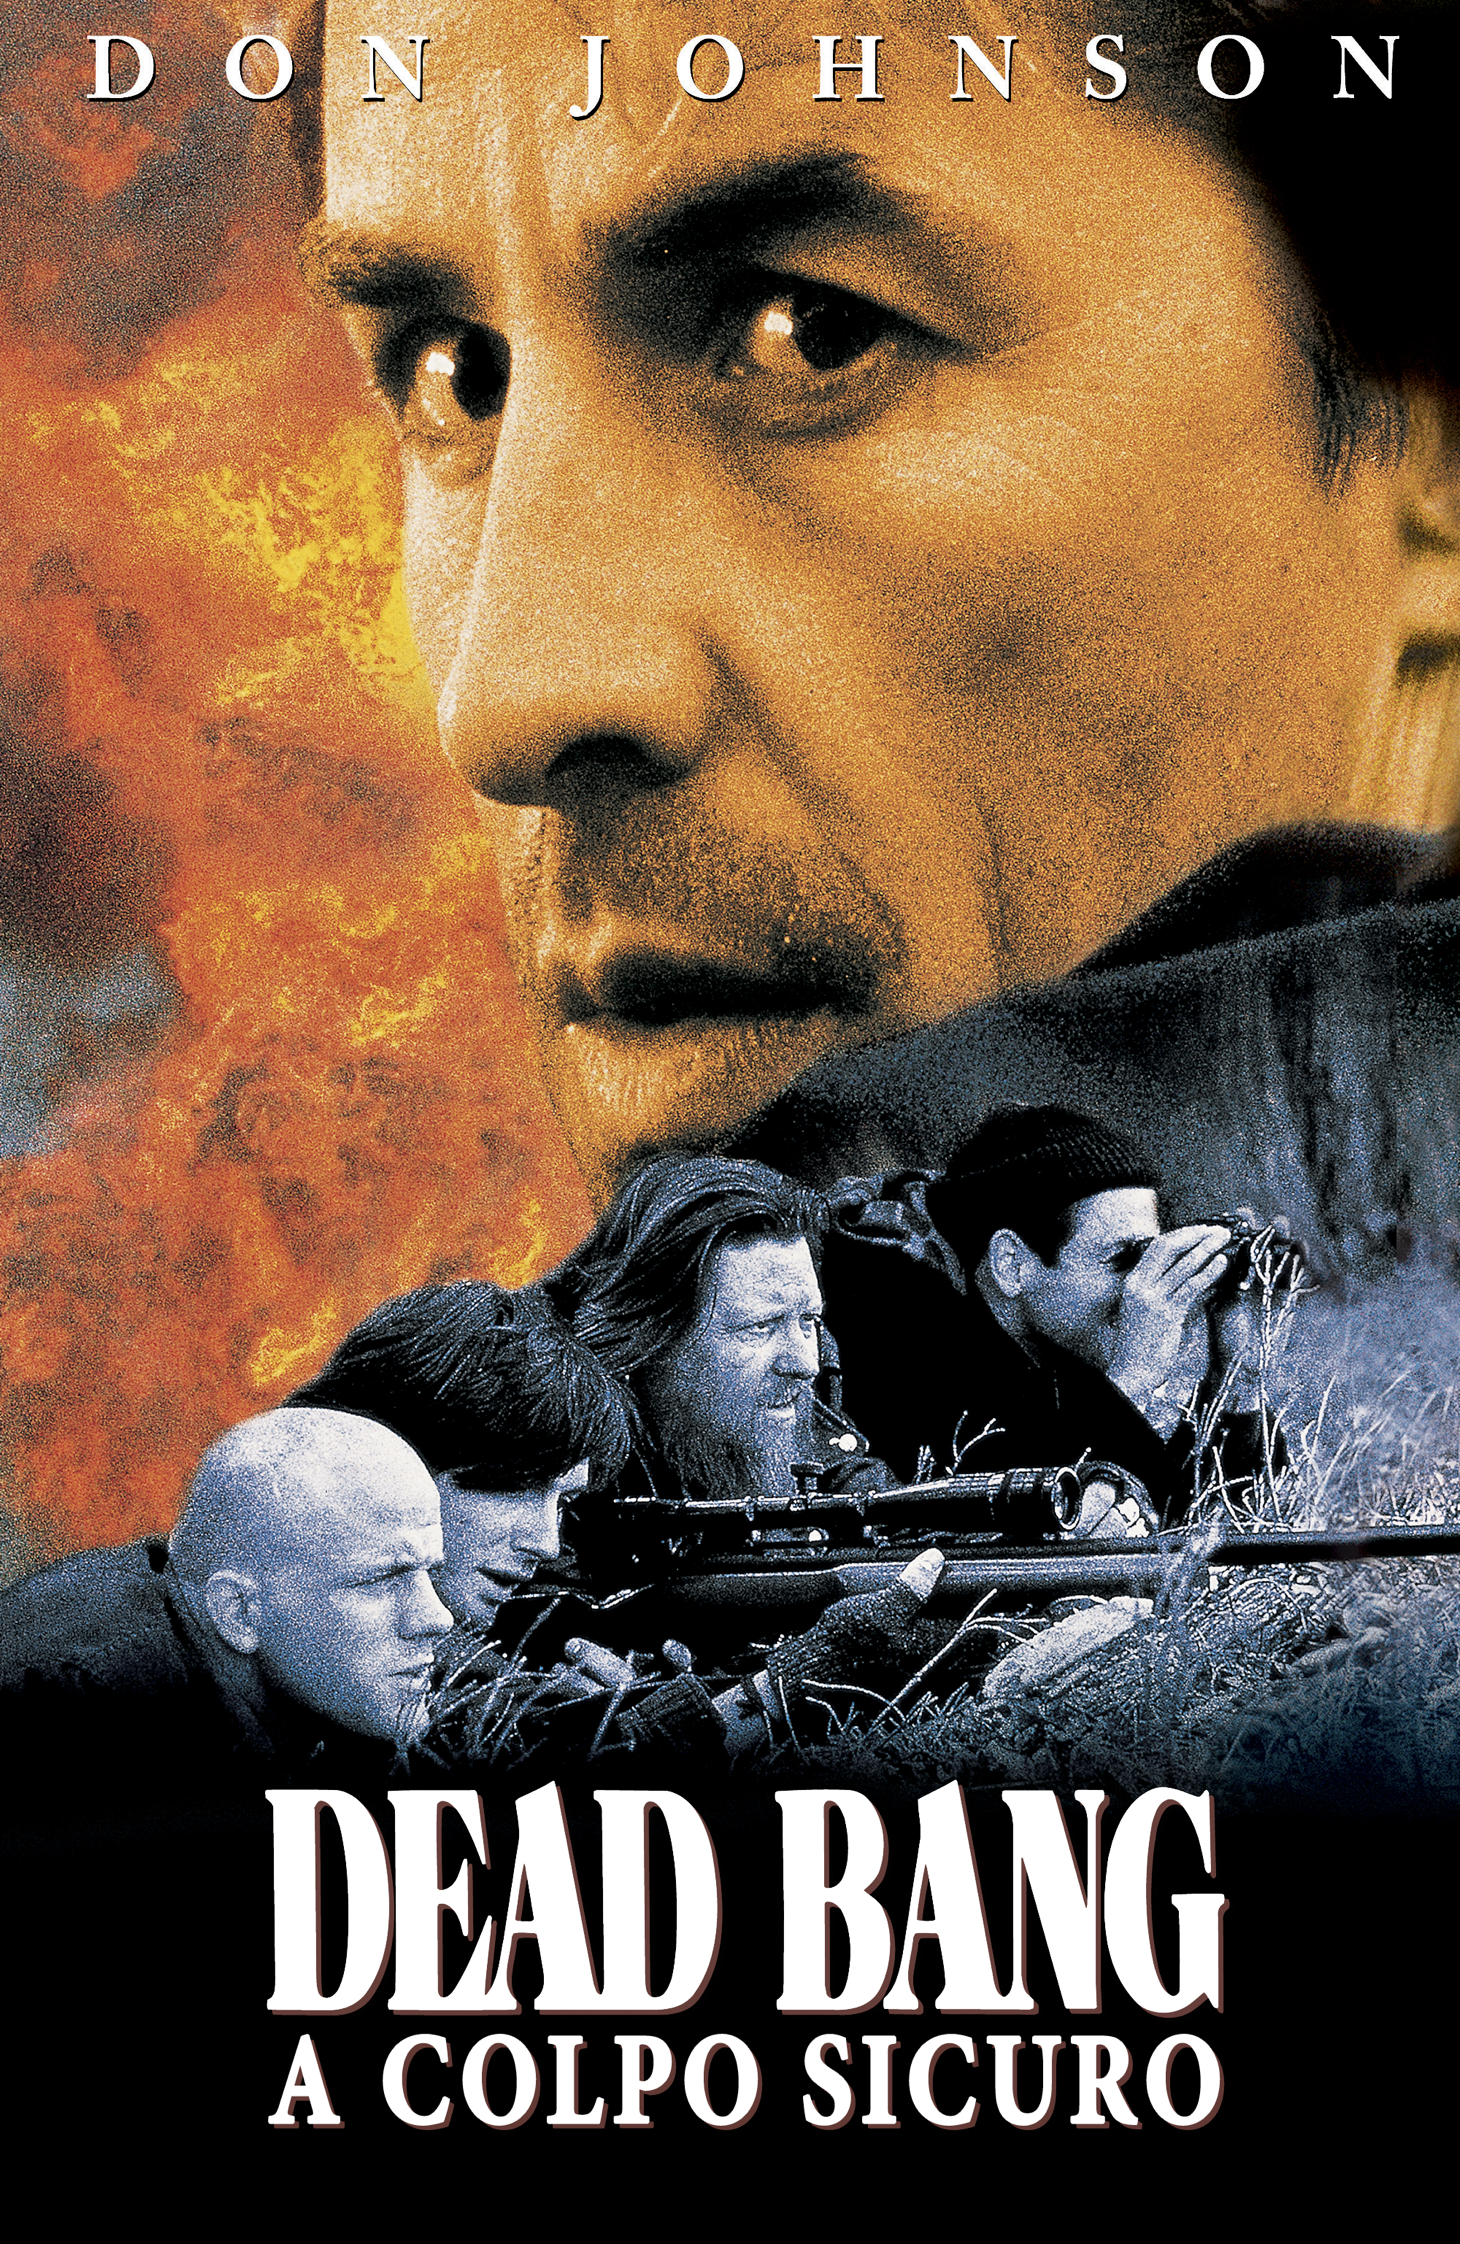 Dead Bang – A colpo sicuro [HD] (1989)